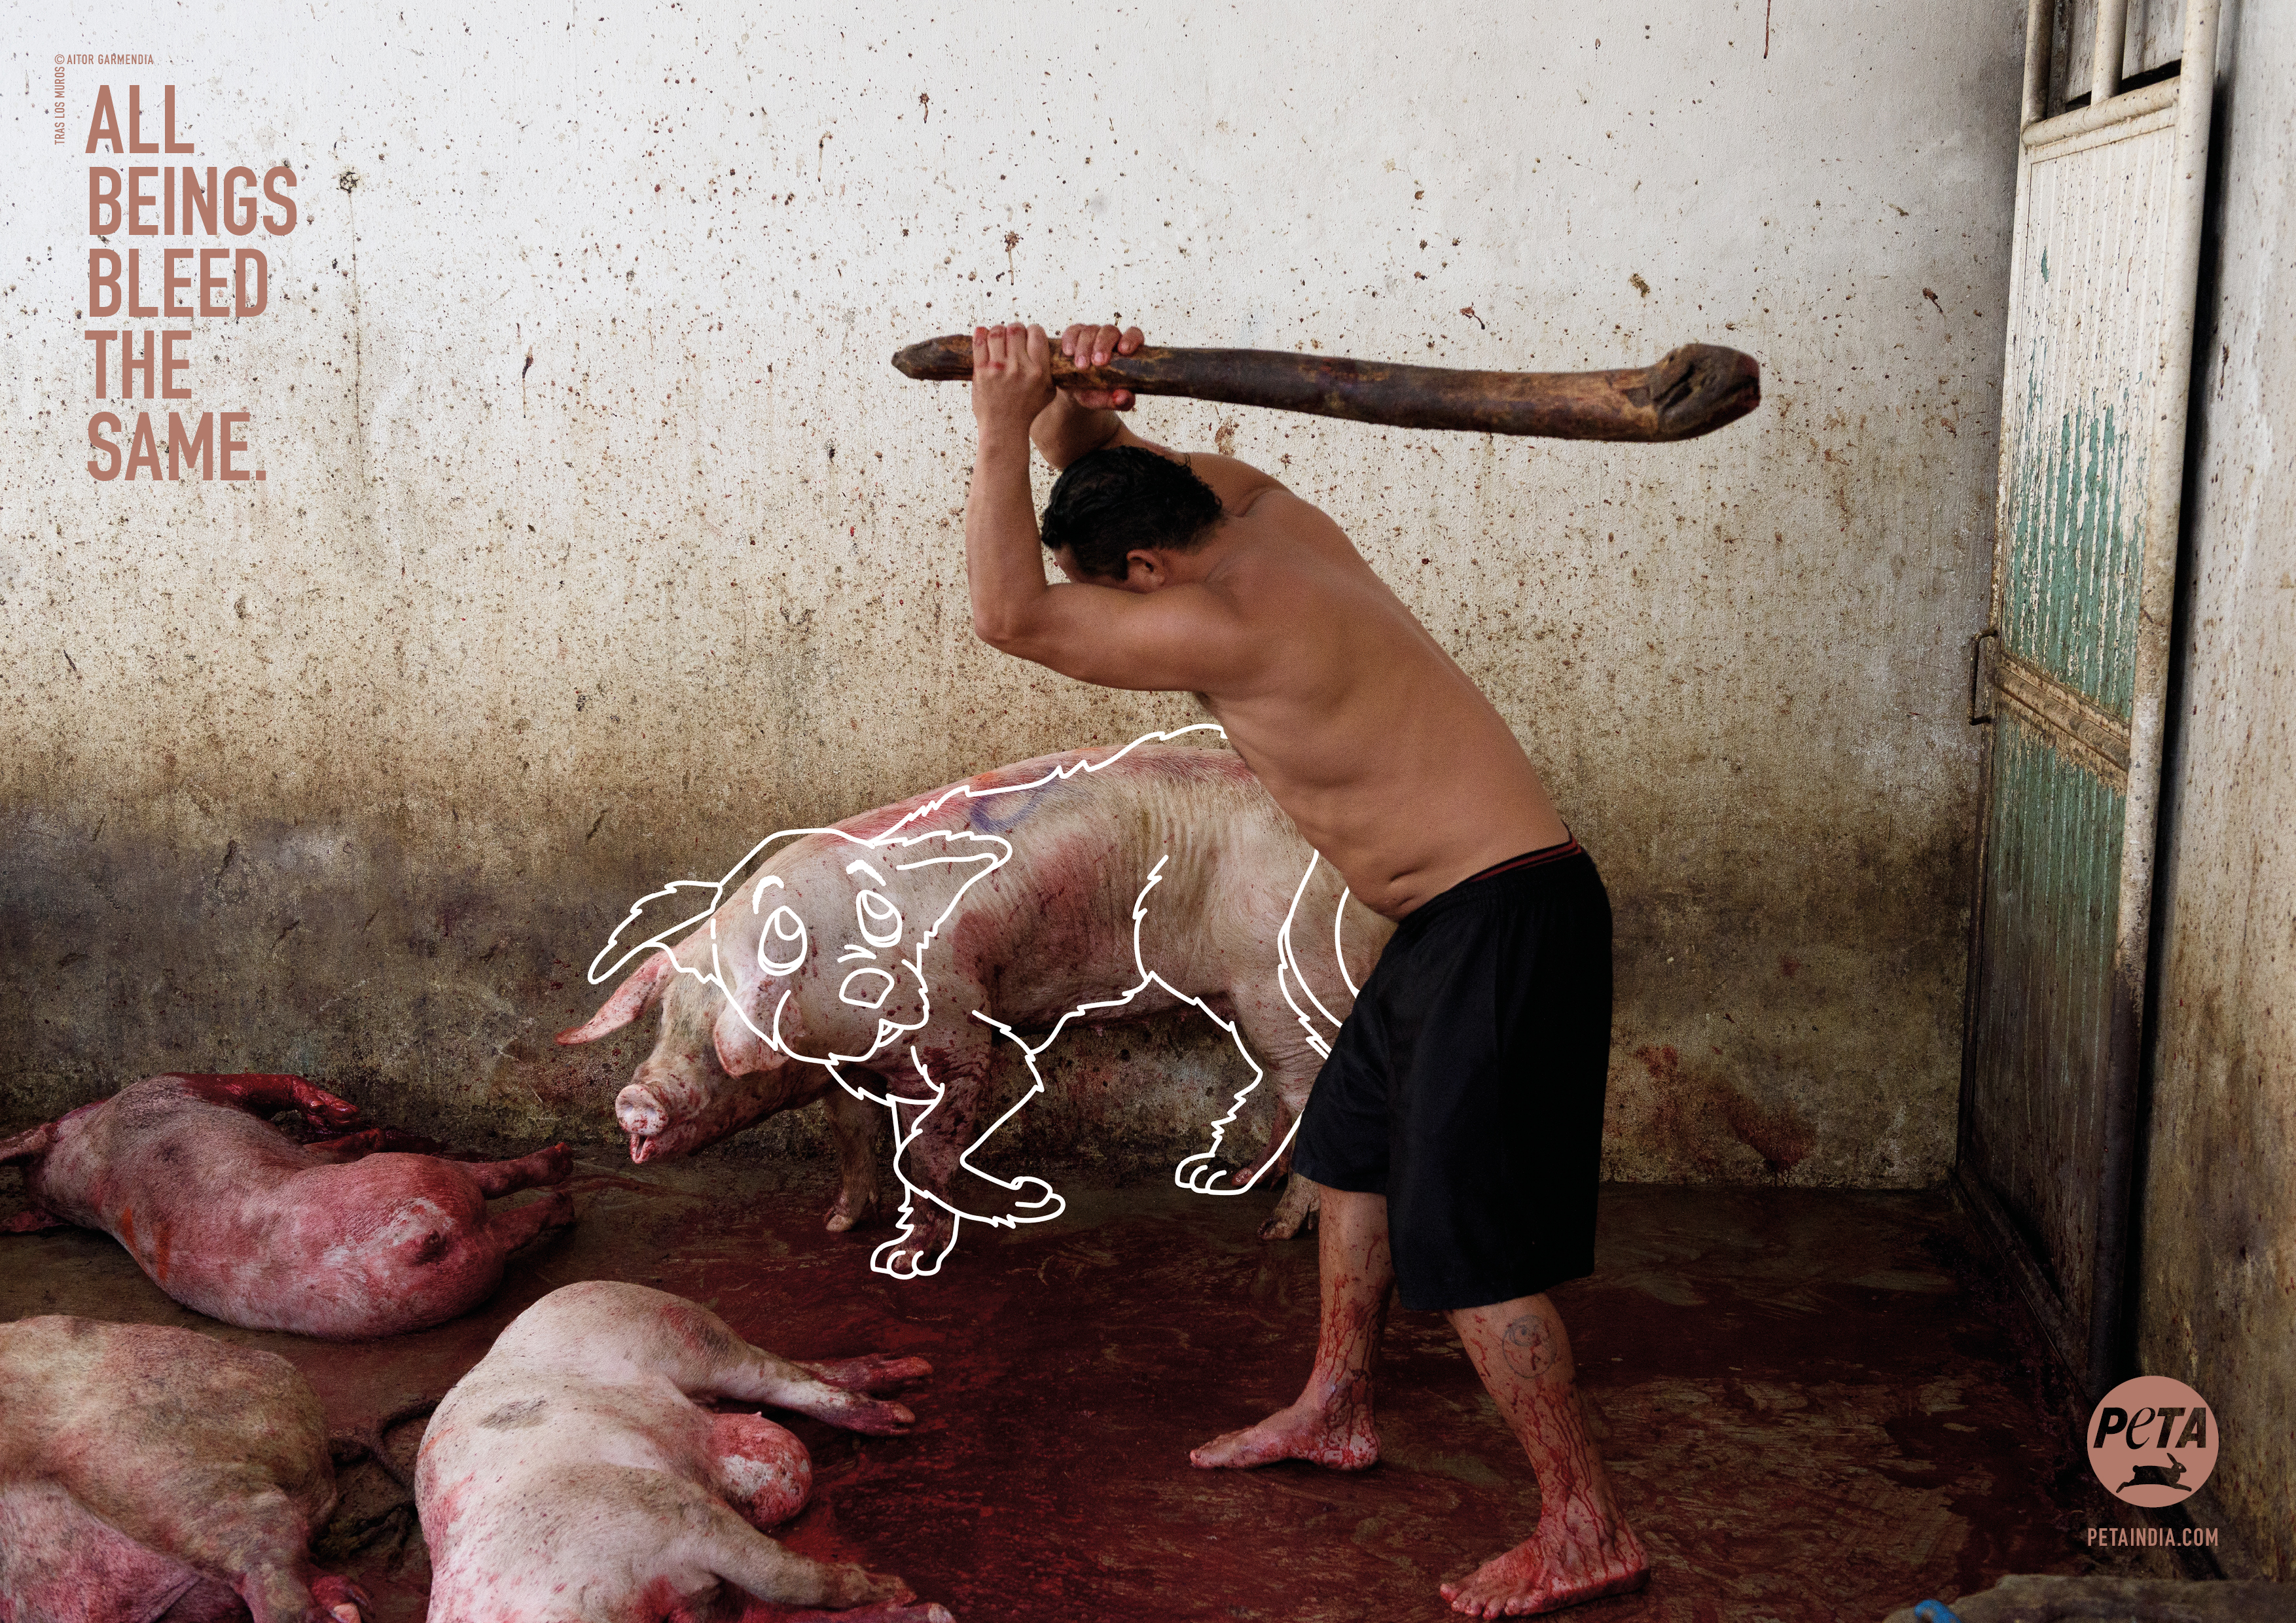 All Beings Bleed the Same': New PETA Ads Challenge Speciesism - Blog - PETA  India